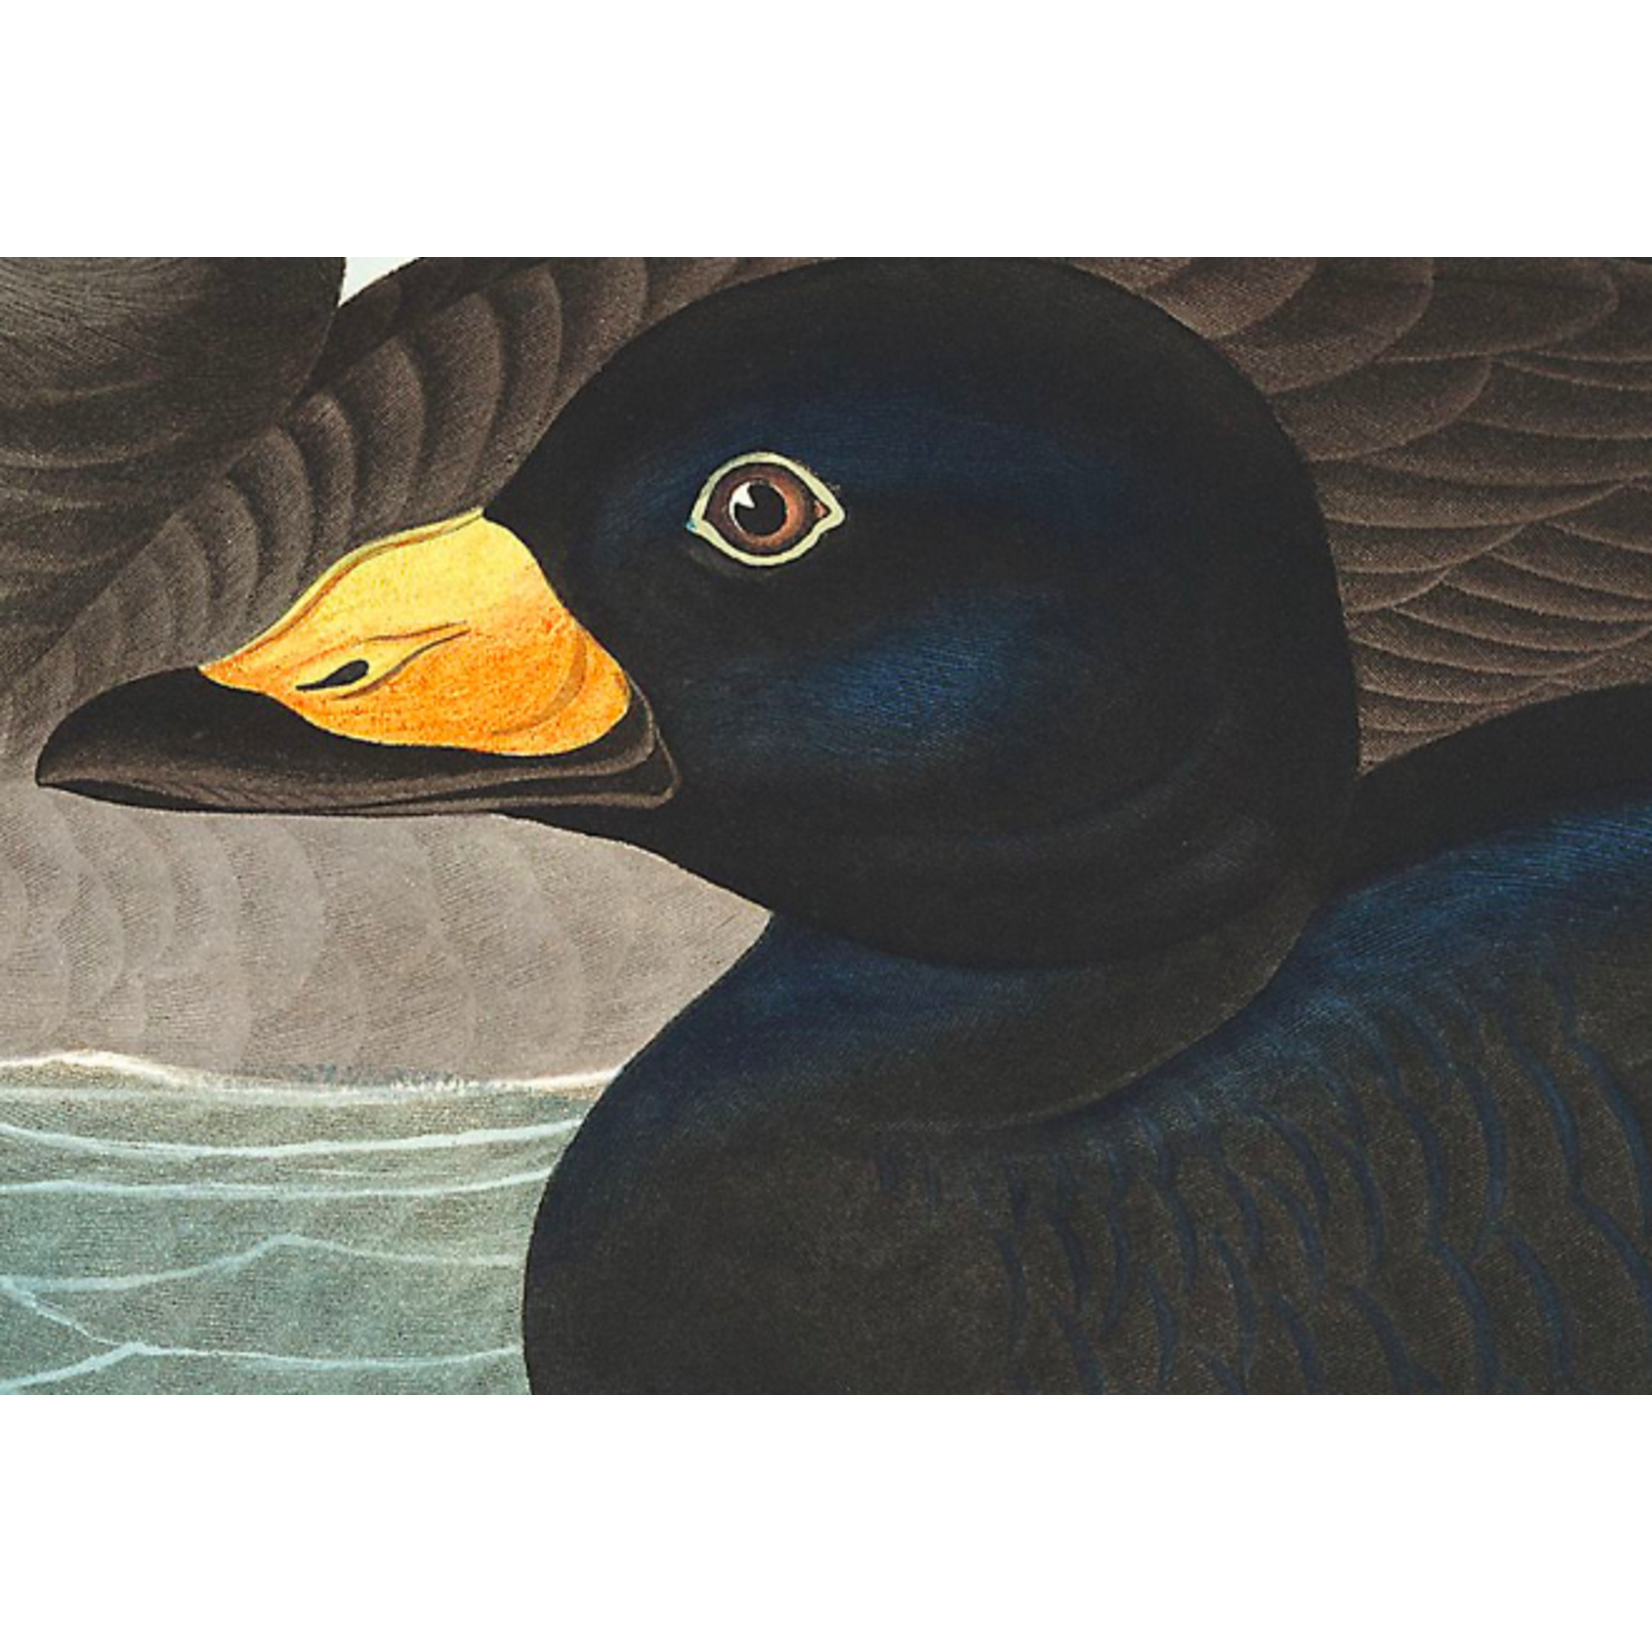 The Picturalist | Fine Art Print on Rag Paper American Scoter Duck by John James Audubon